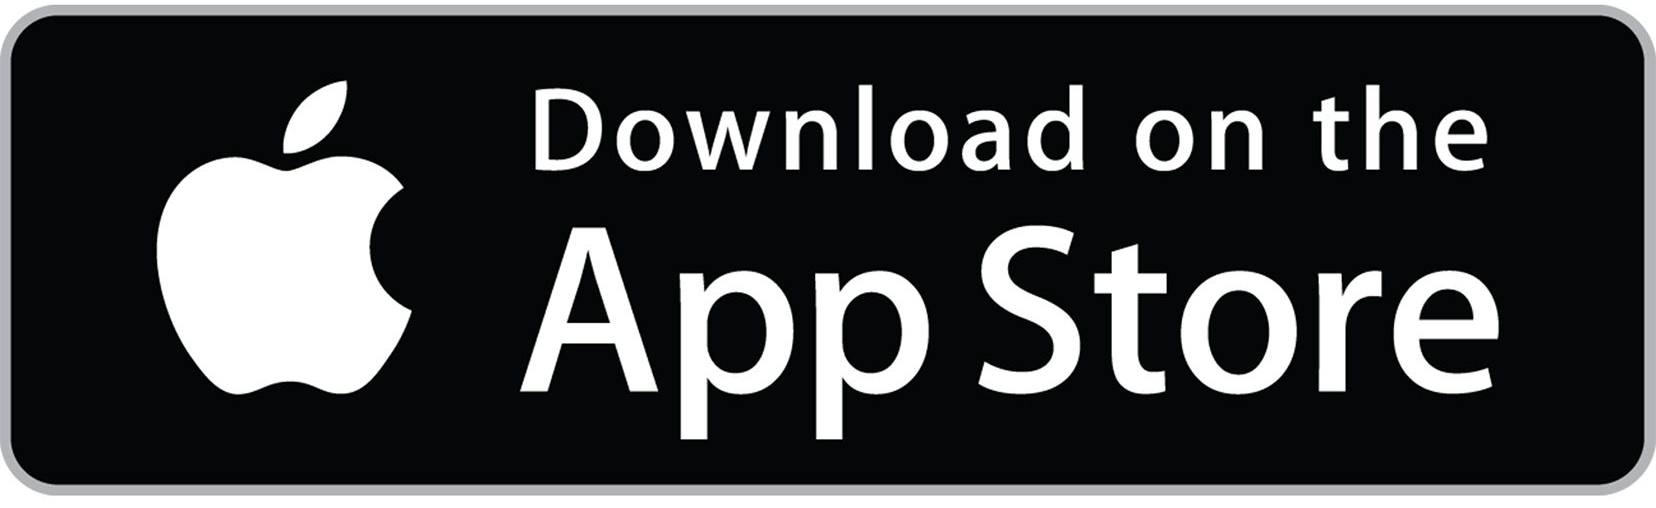 Apple App Store download button 